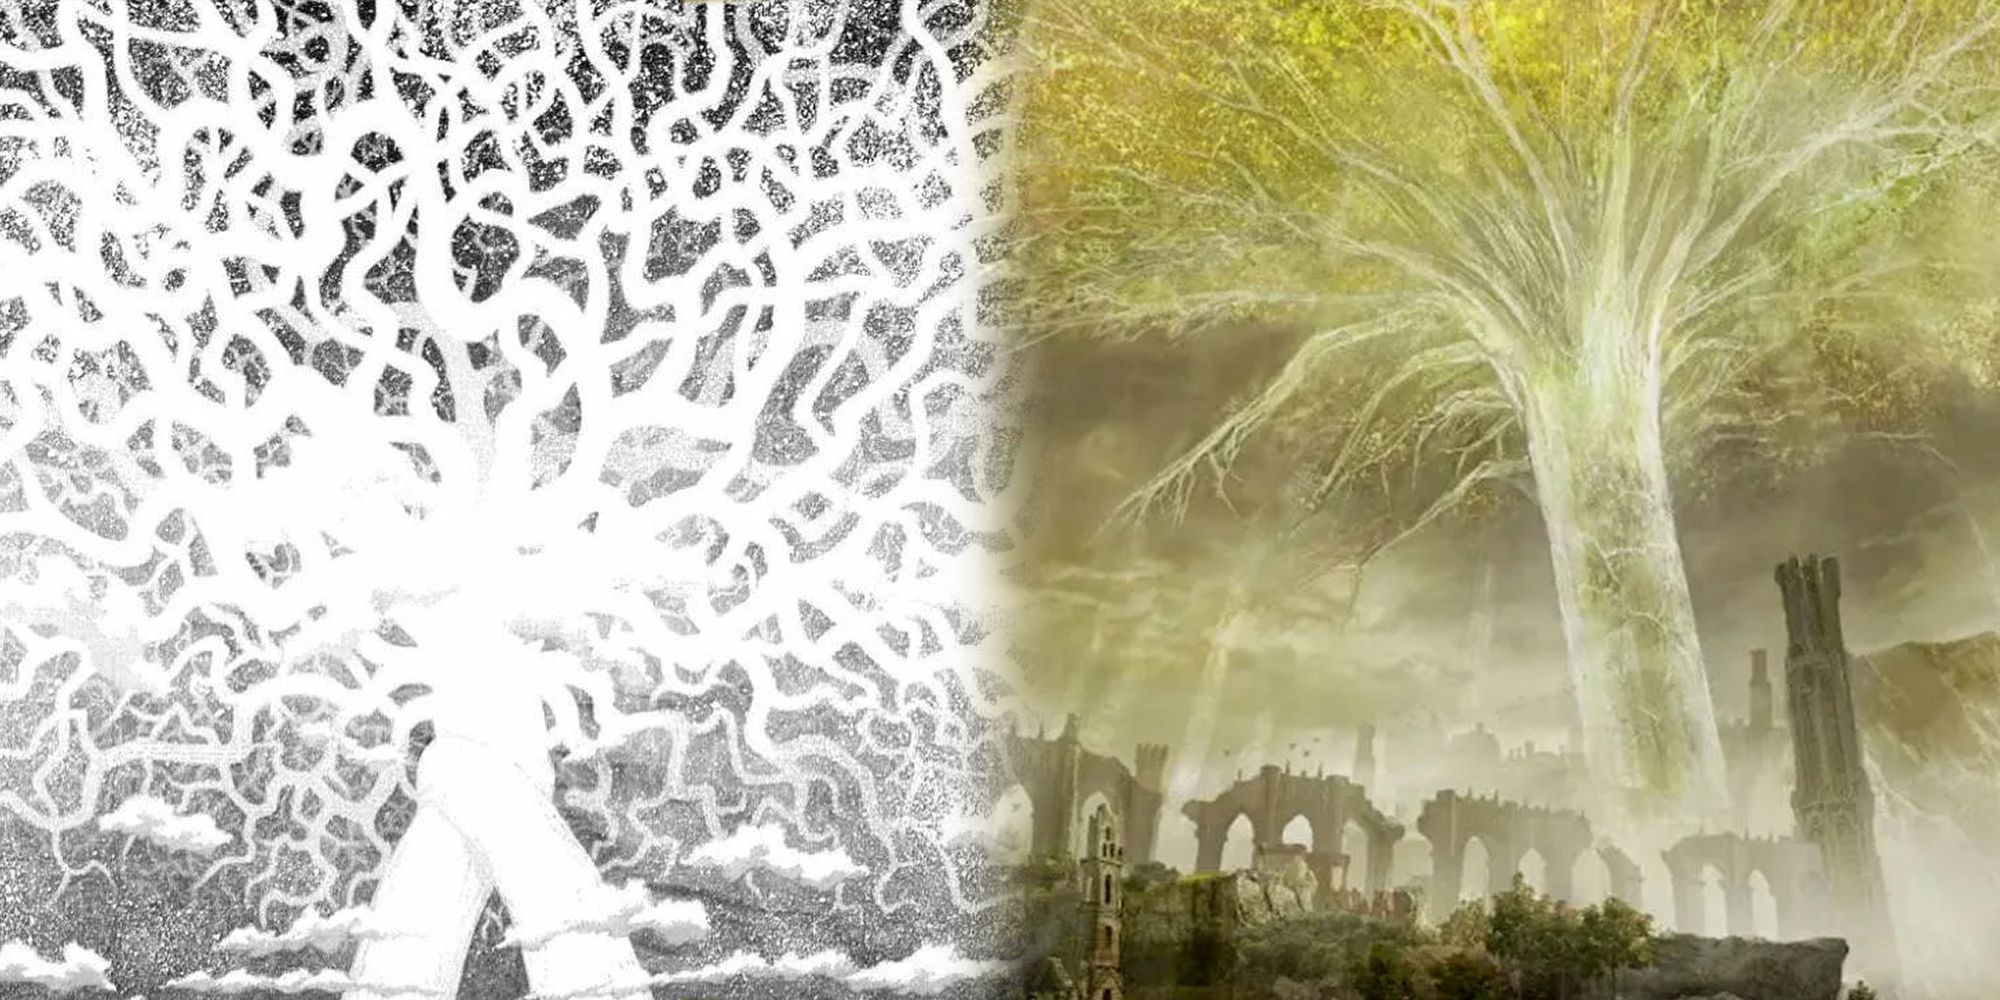 Elden Ring - Side By Side Comparison Of Spirit Spiral Tree In Berserk and Erdtree In Elden Ring